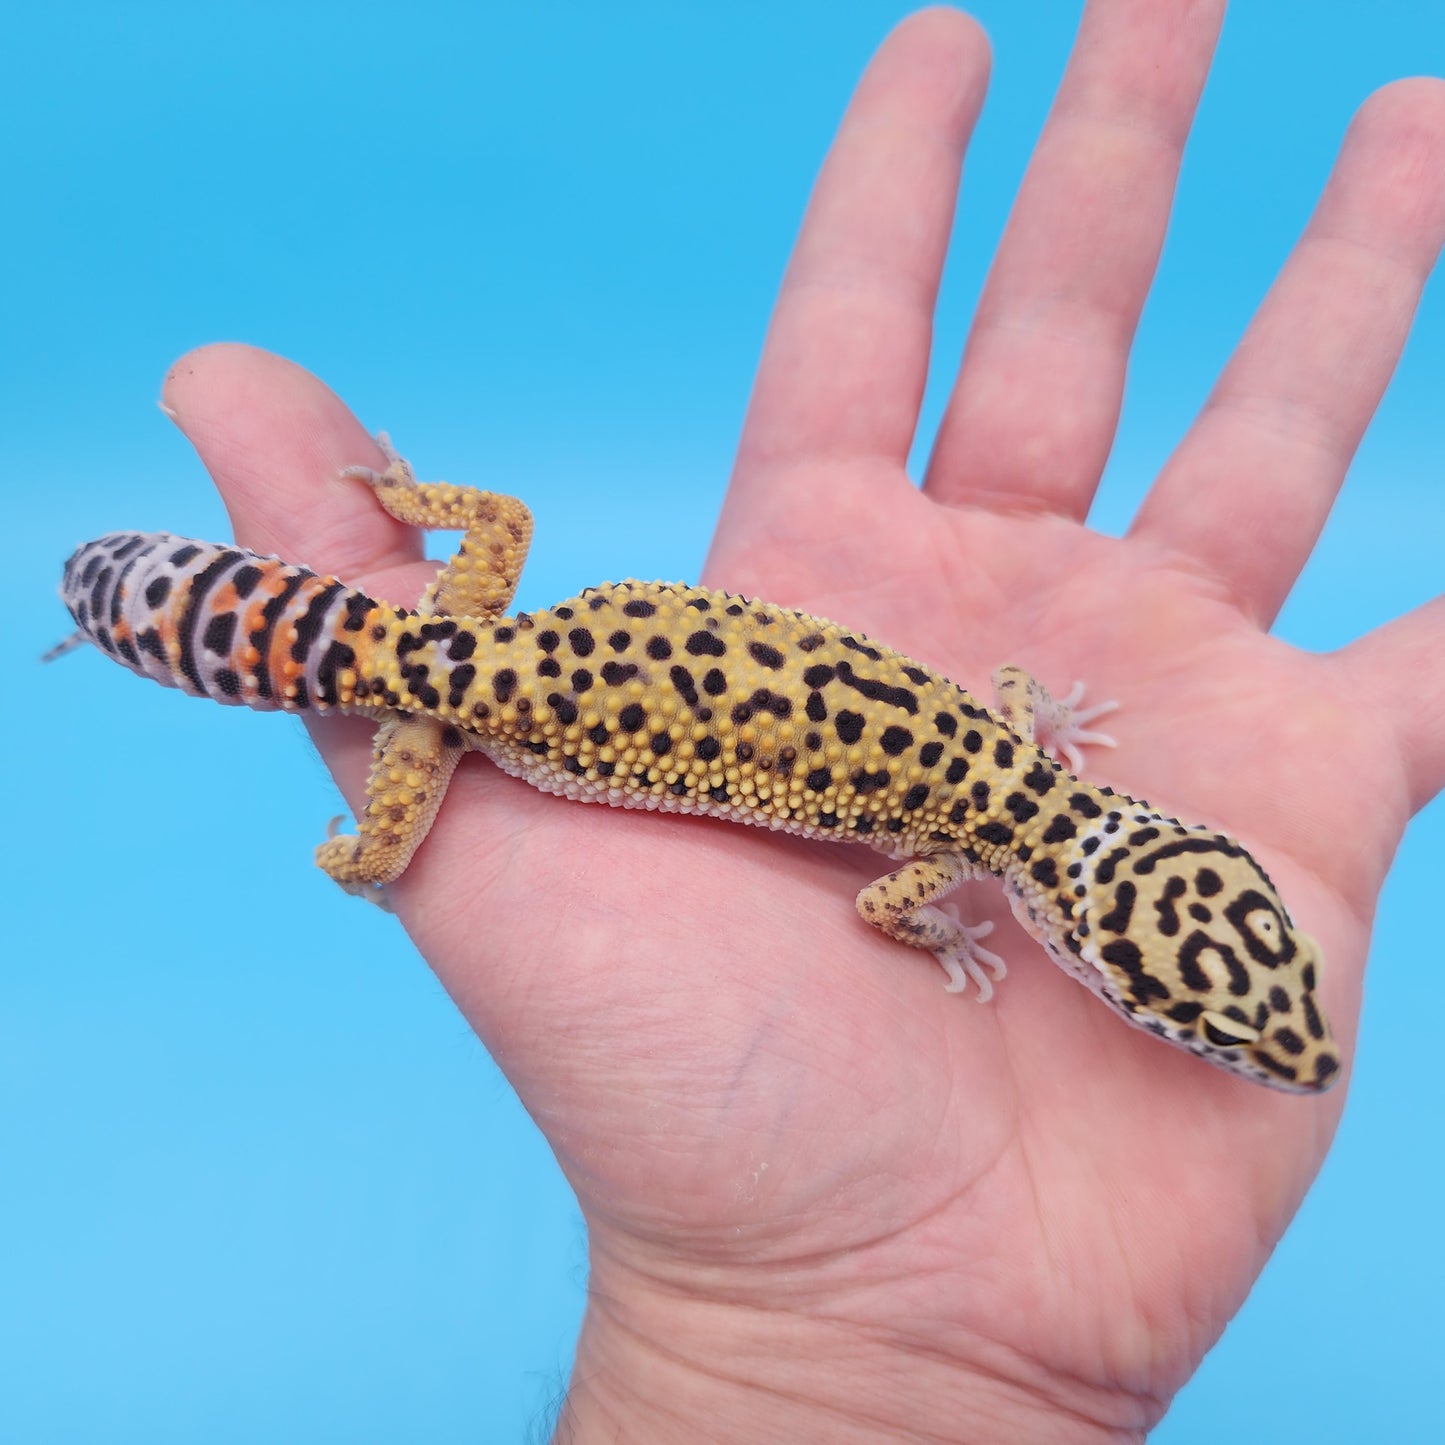 Male Mandarin Inferno Afghanicus Turcmenicus Leopard Gecko (Special!)